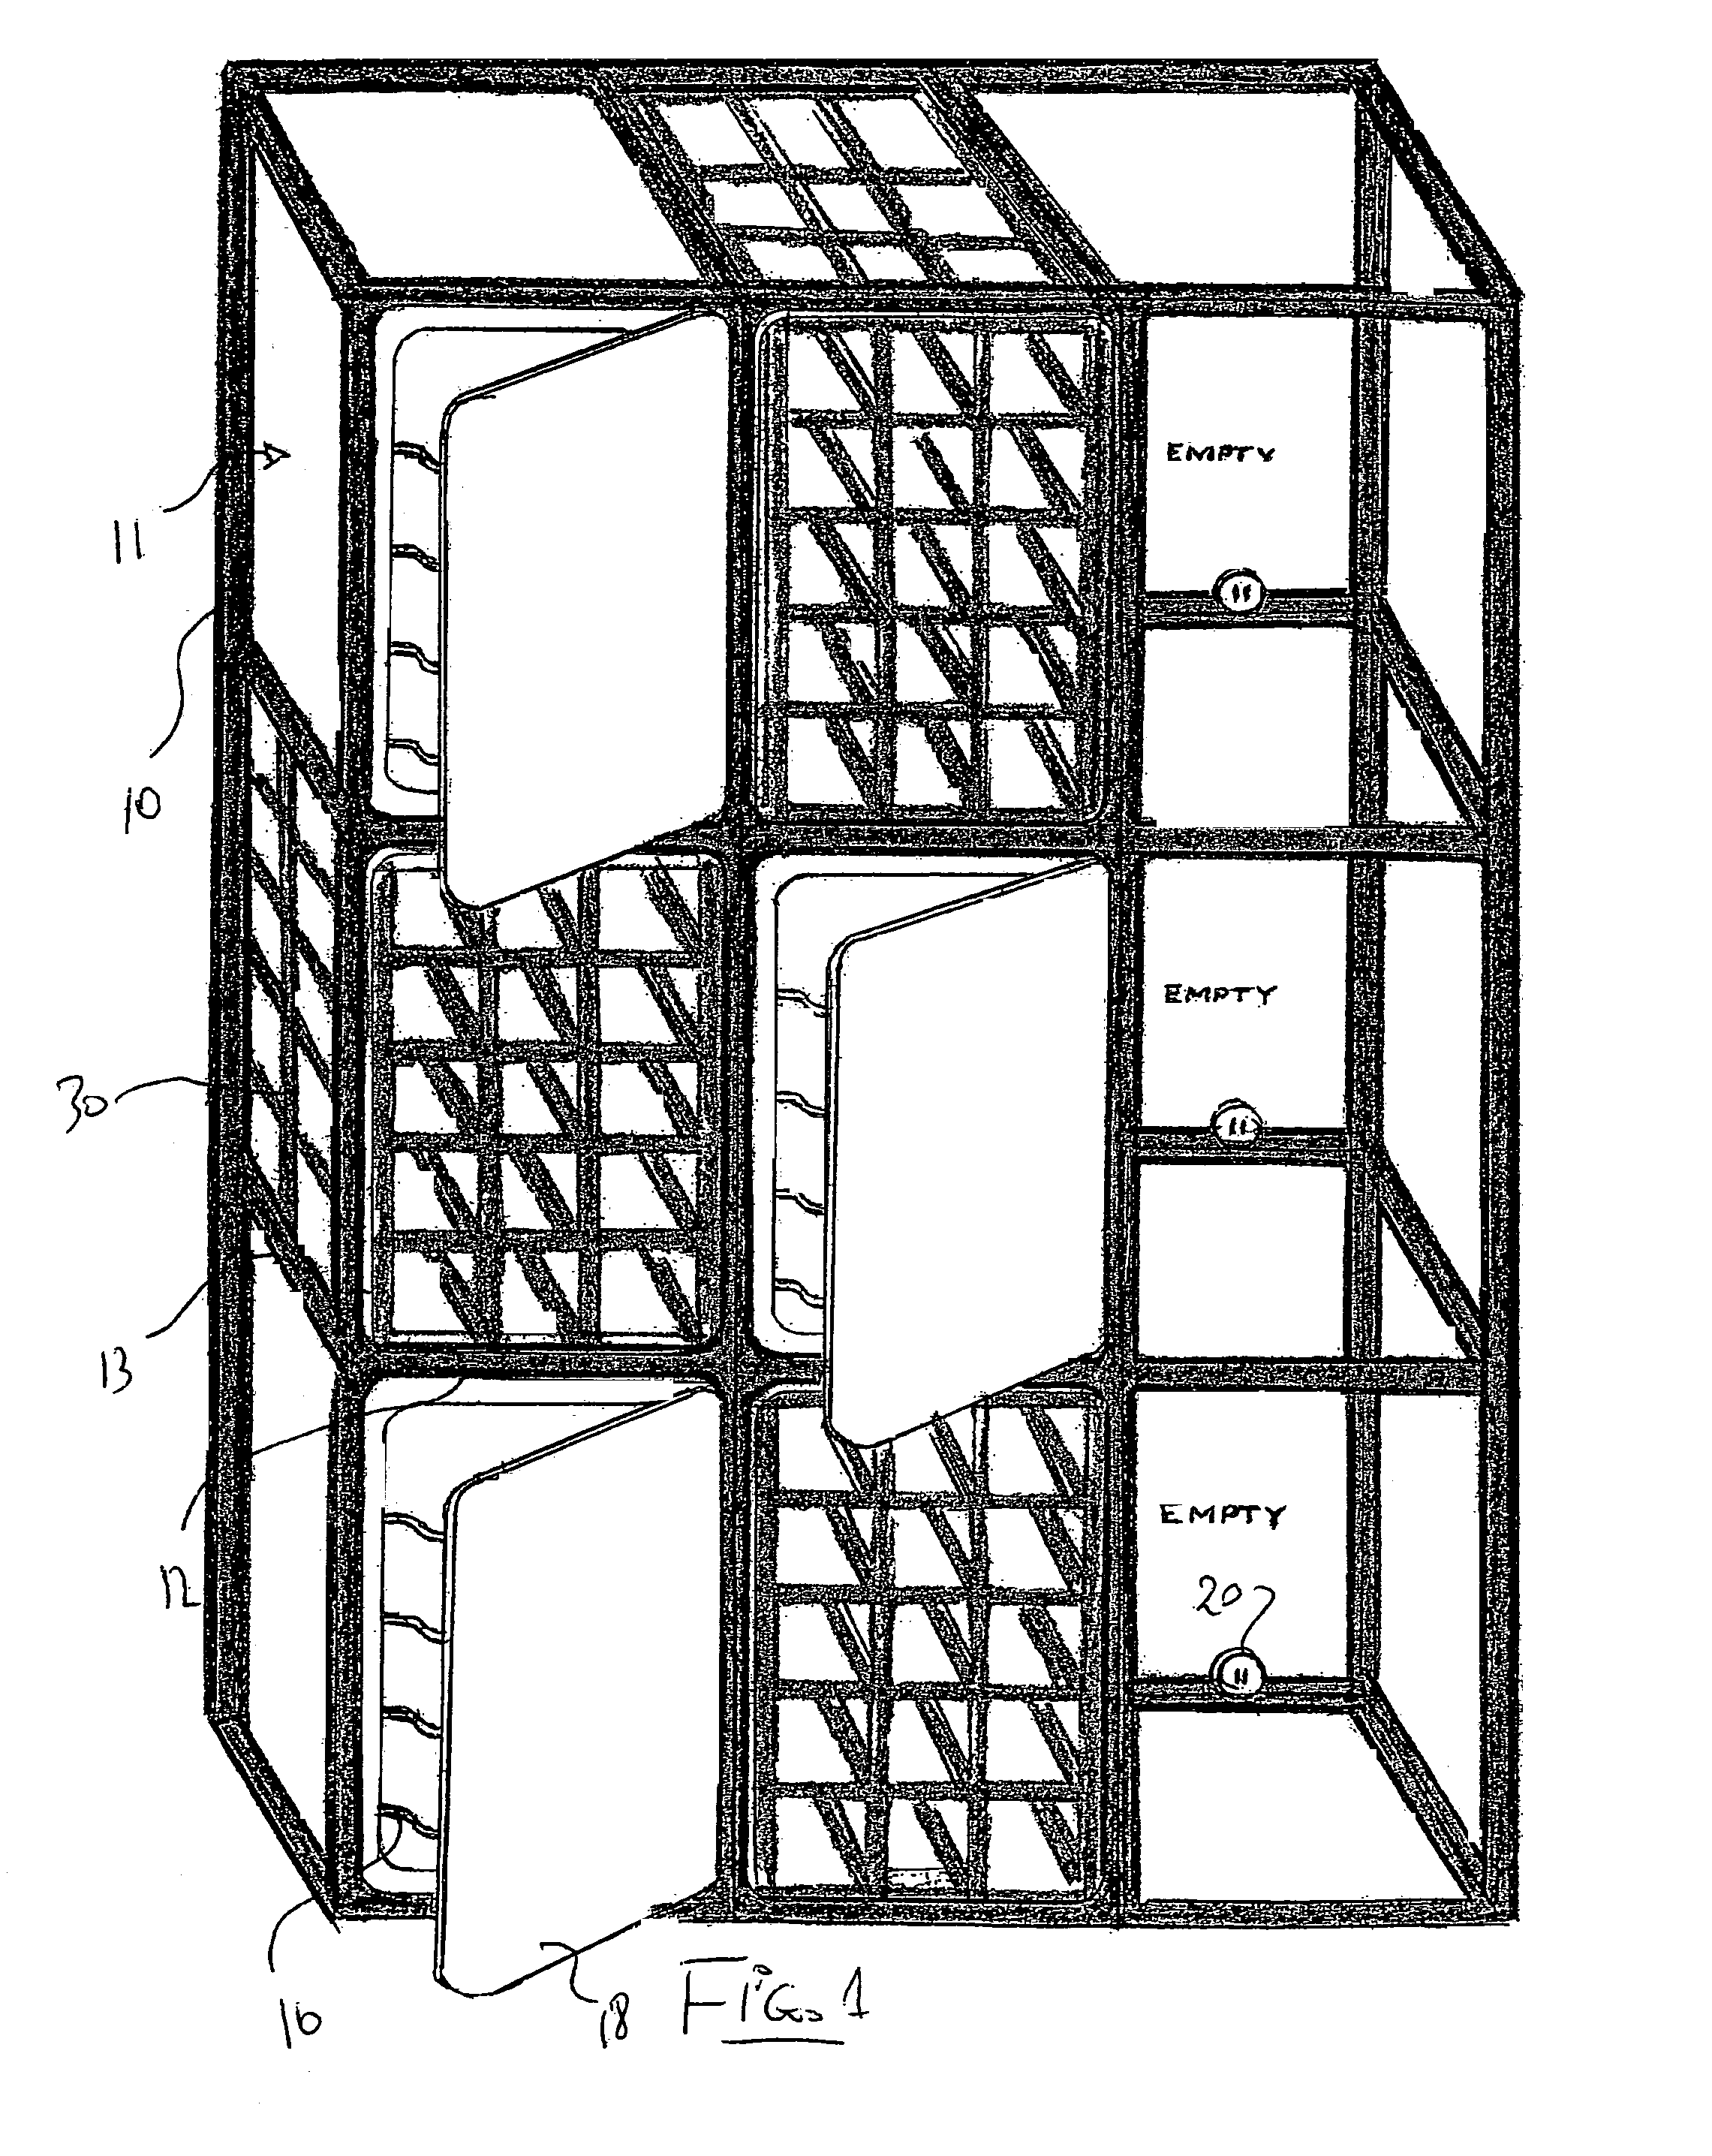 Modular wine cellar and wine storage system